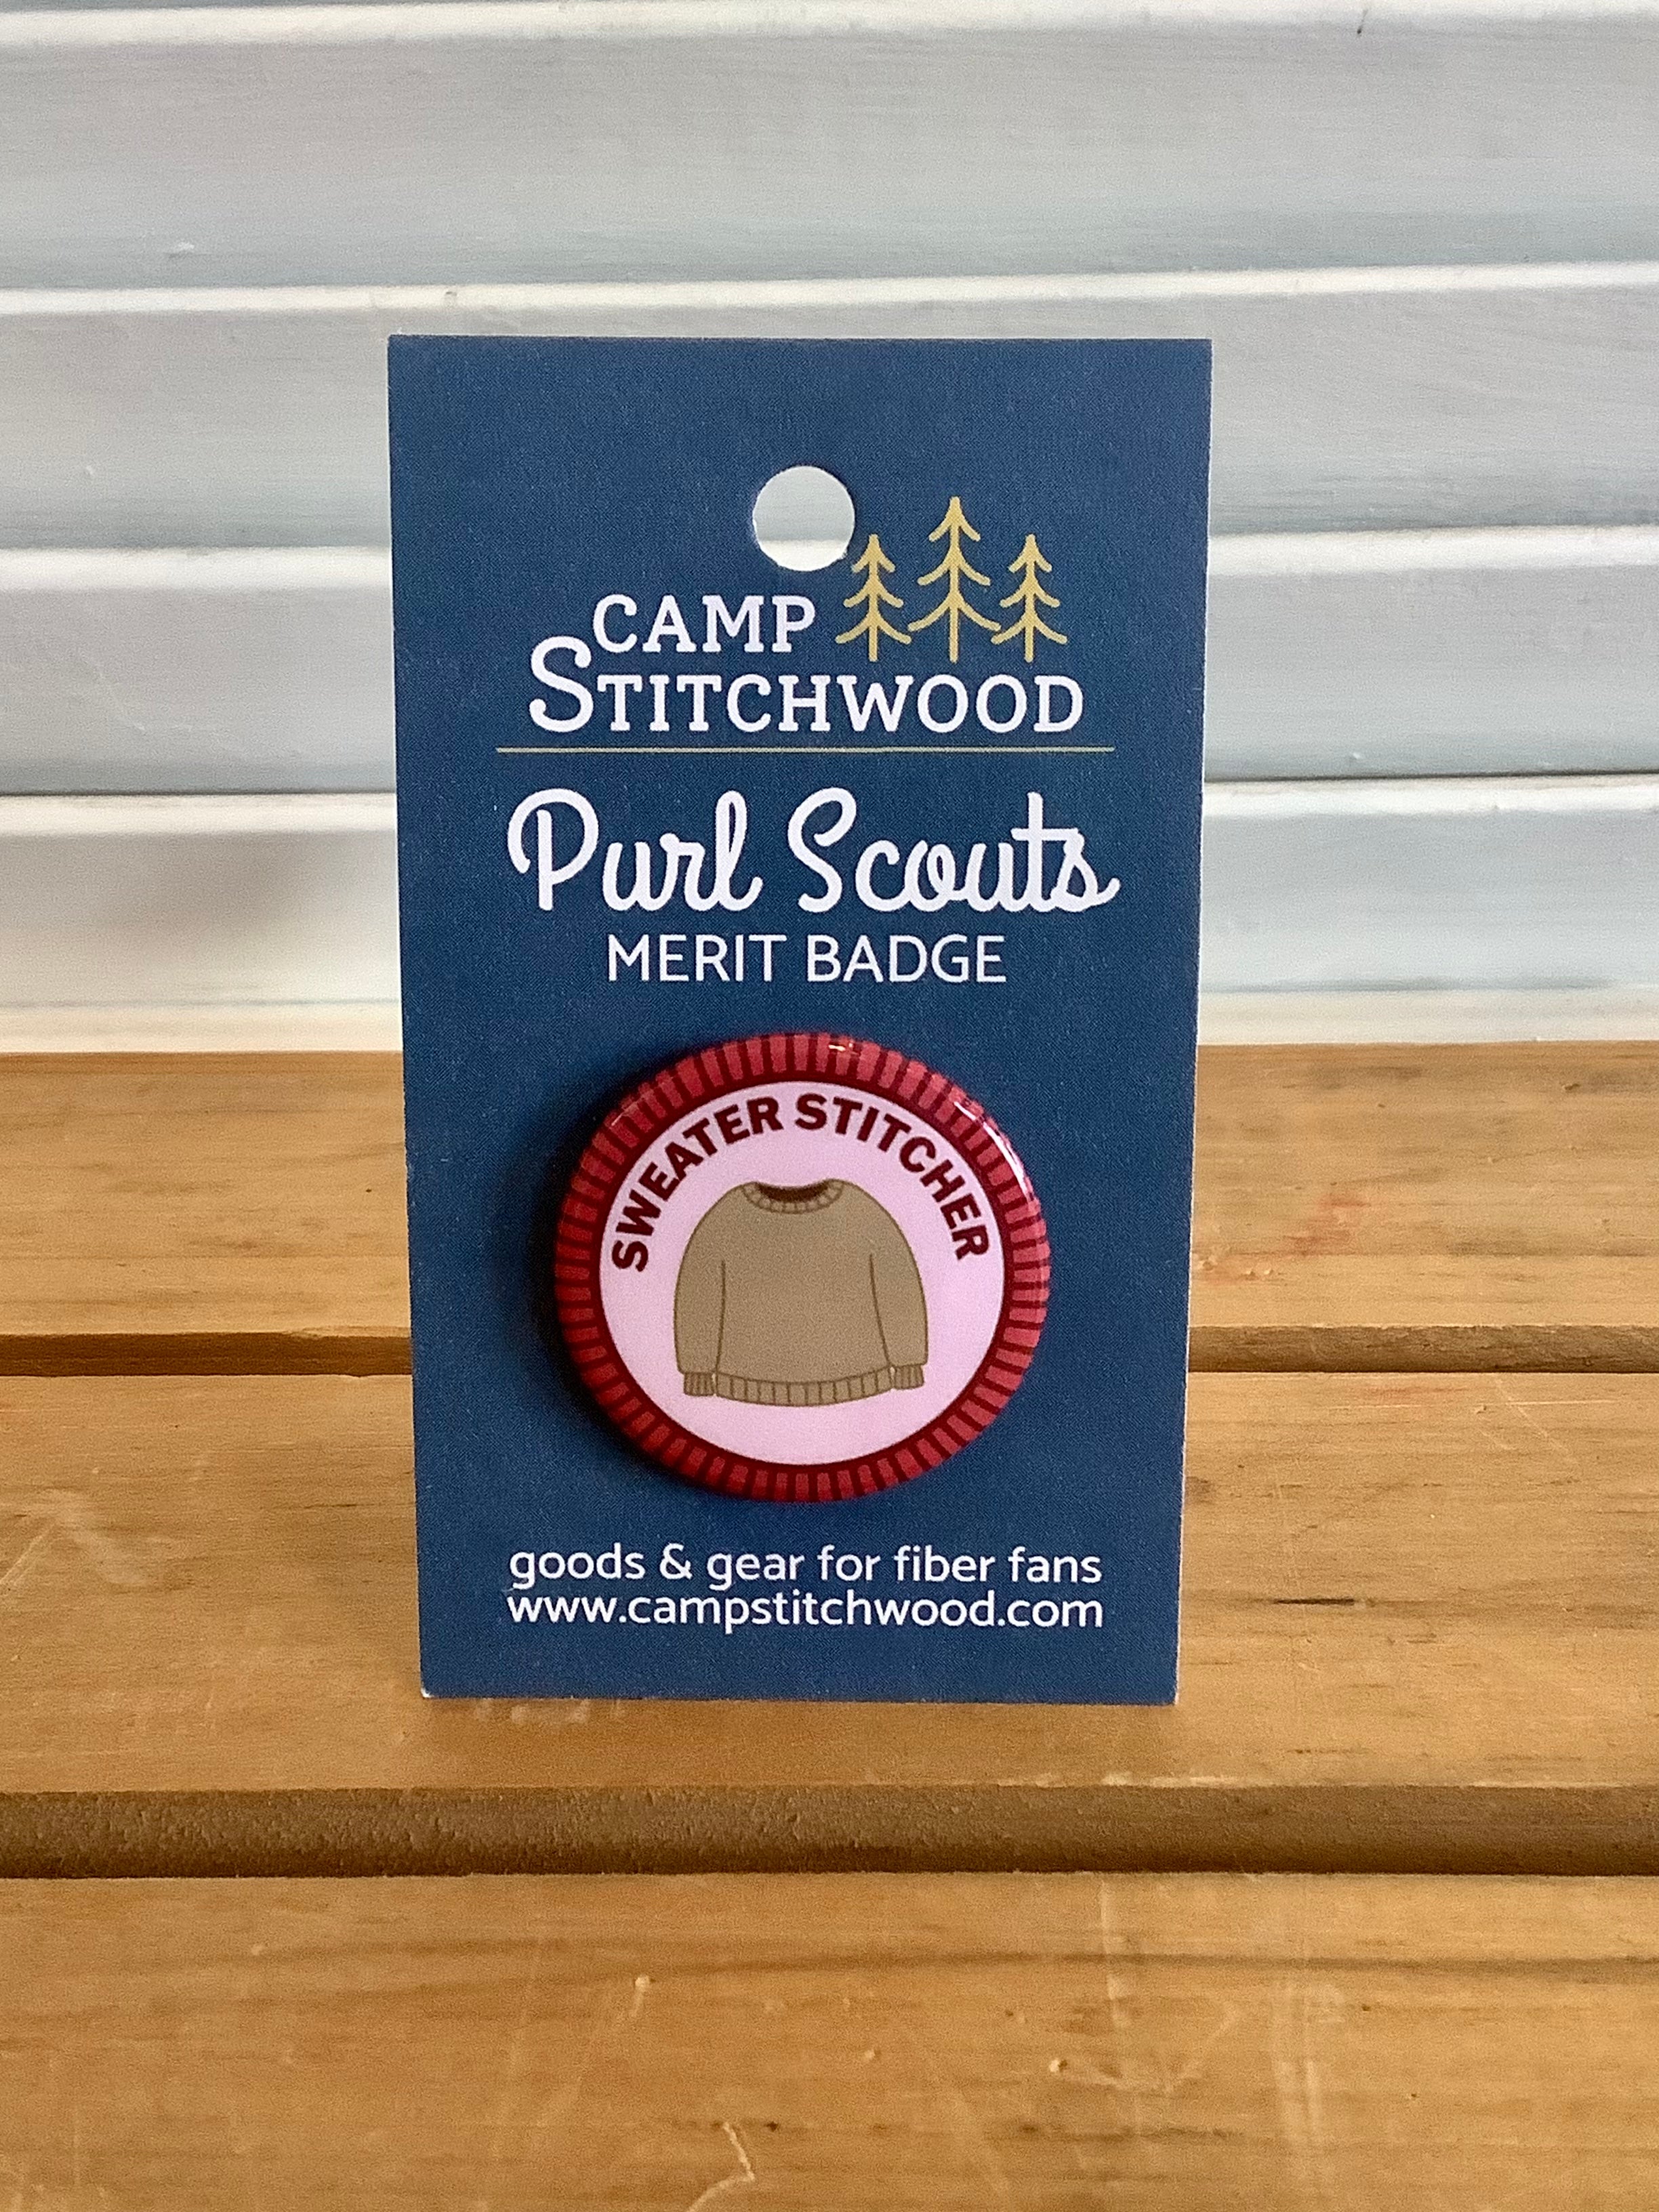 Sweater Stitcher - Purl Scouts Merit Badge